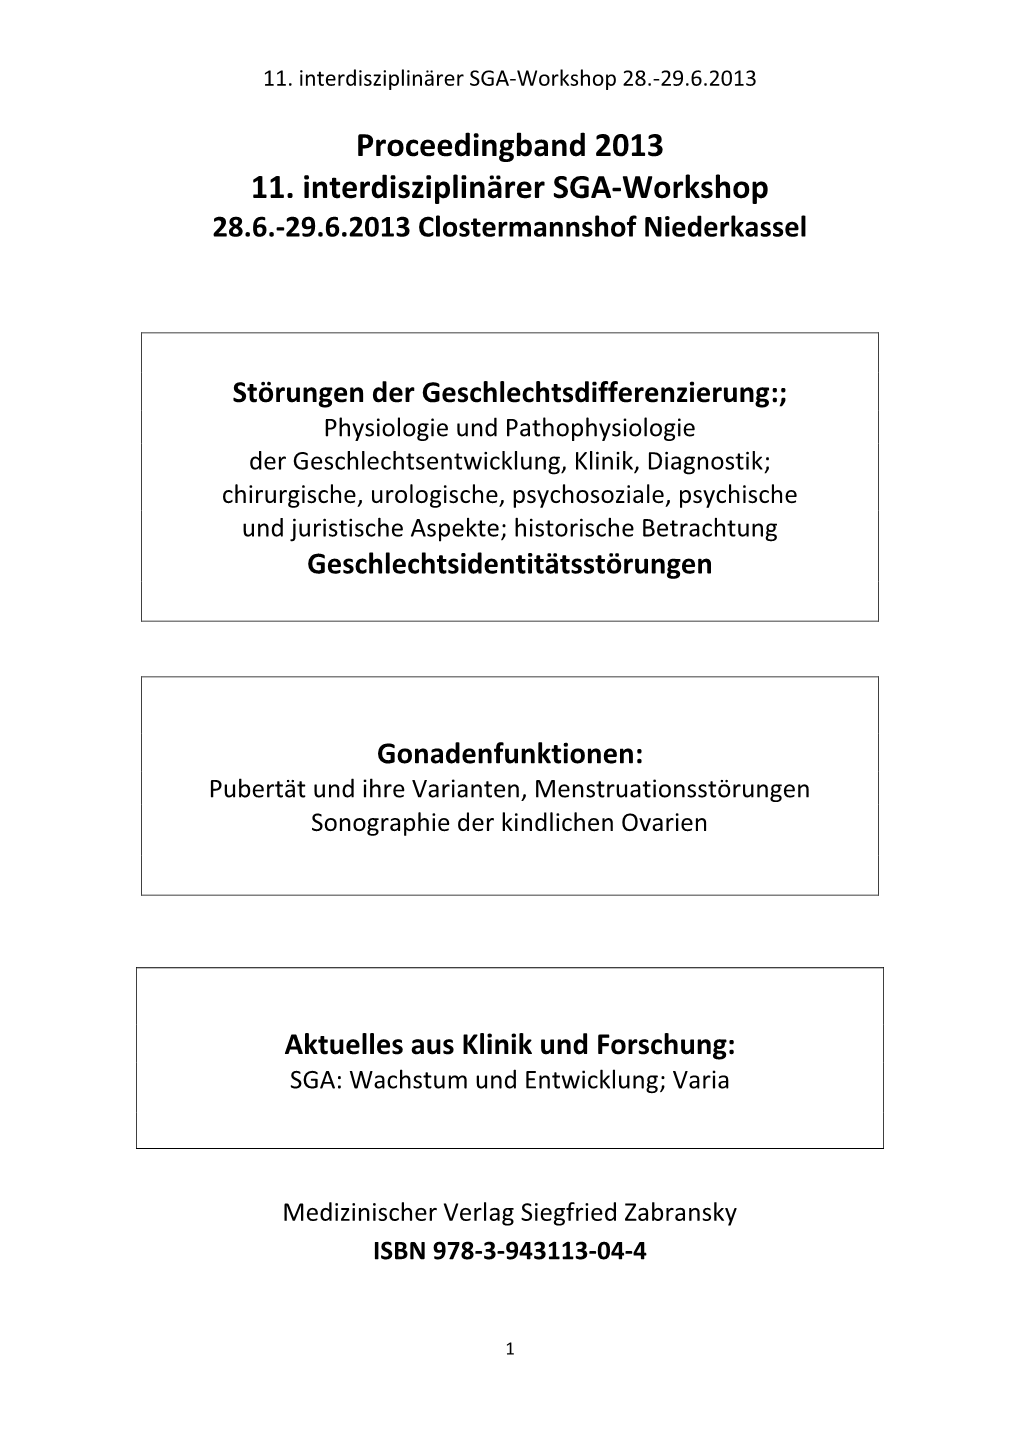 Proceedingband 2013 11. Interdisziplinärer SGA-Workshop 28.6.-29.6.2013 Clostermannshof Niederkassel